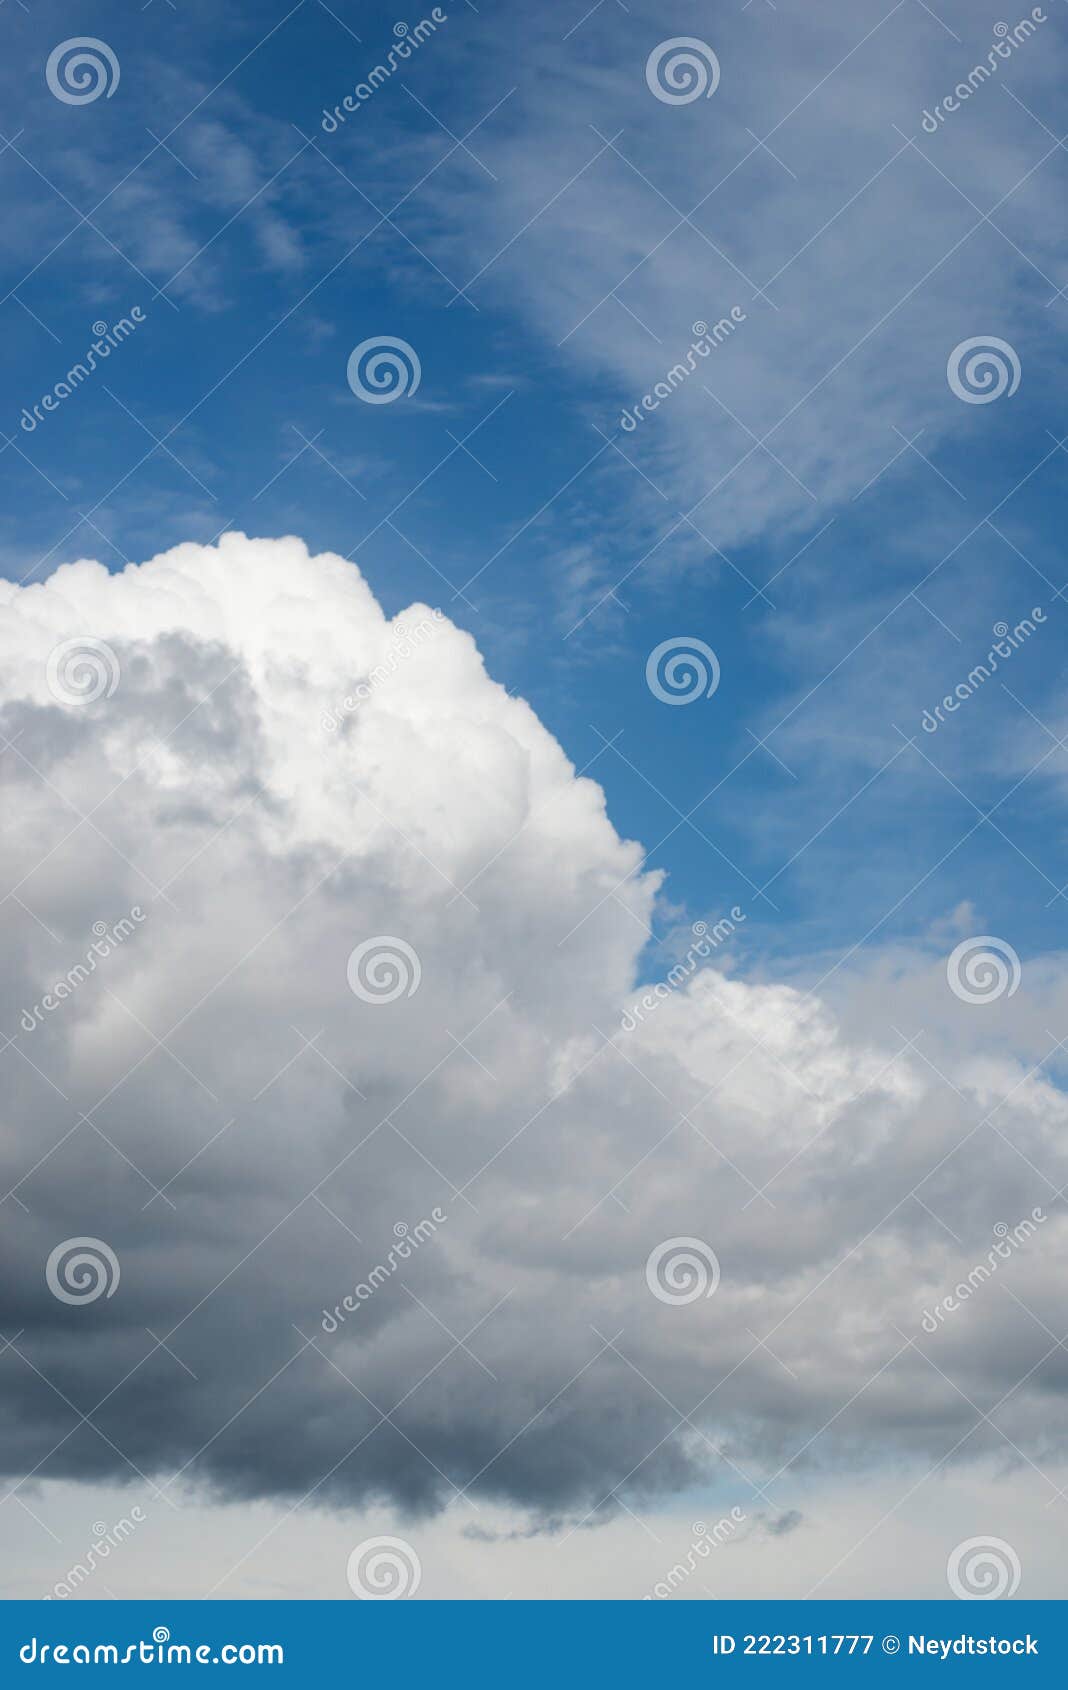 big cumulo nimbus cloud in the blue sky background